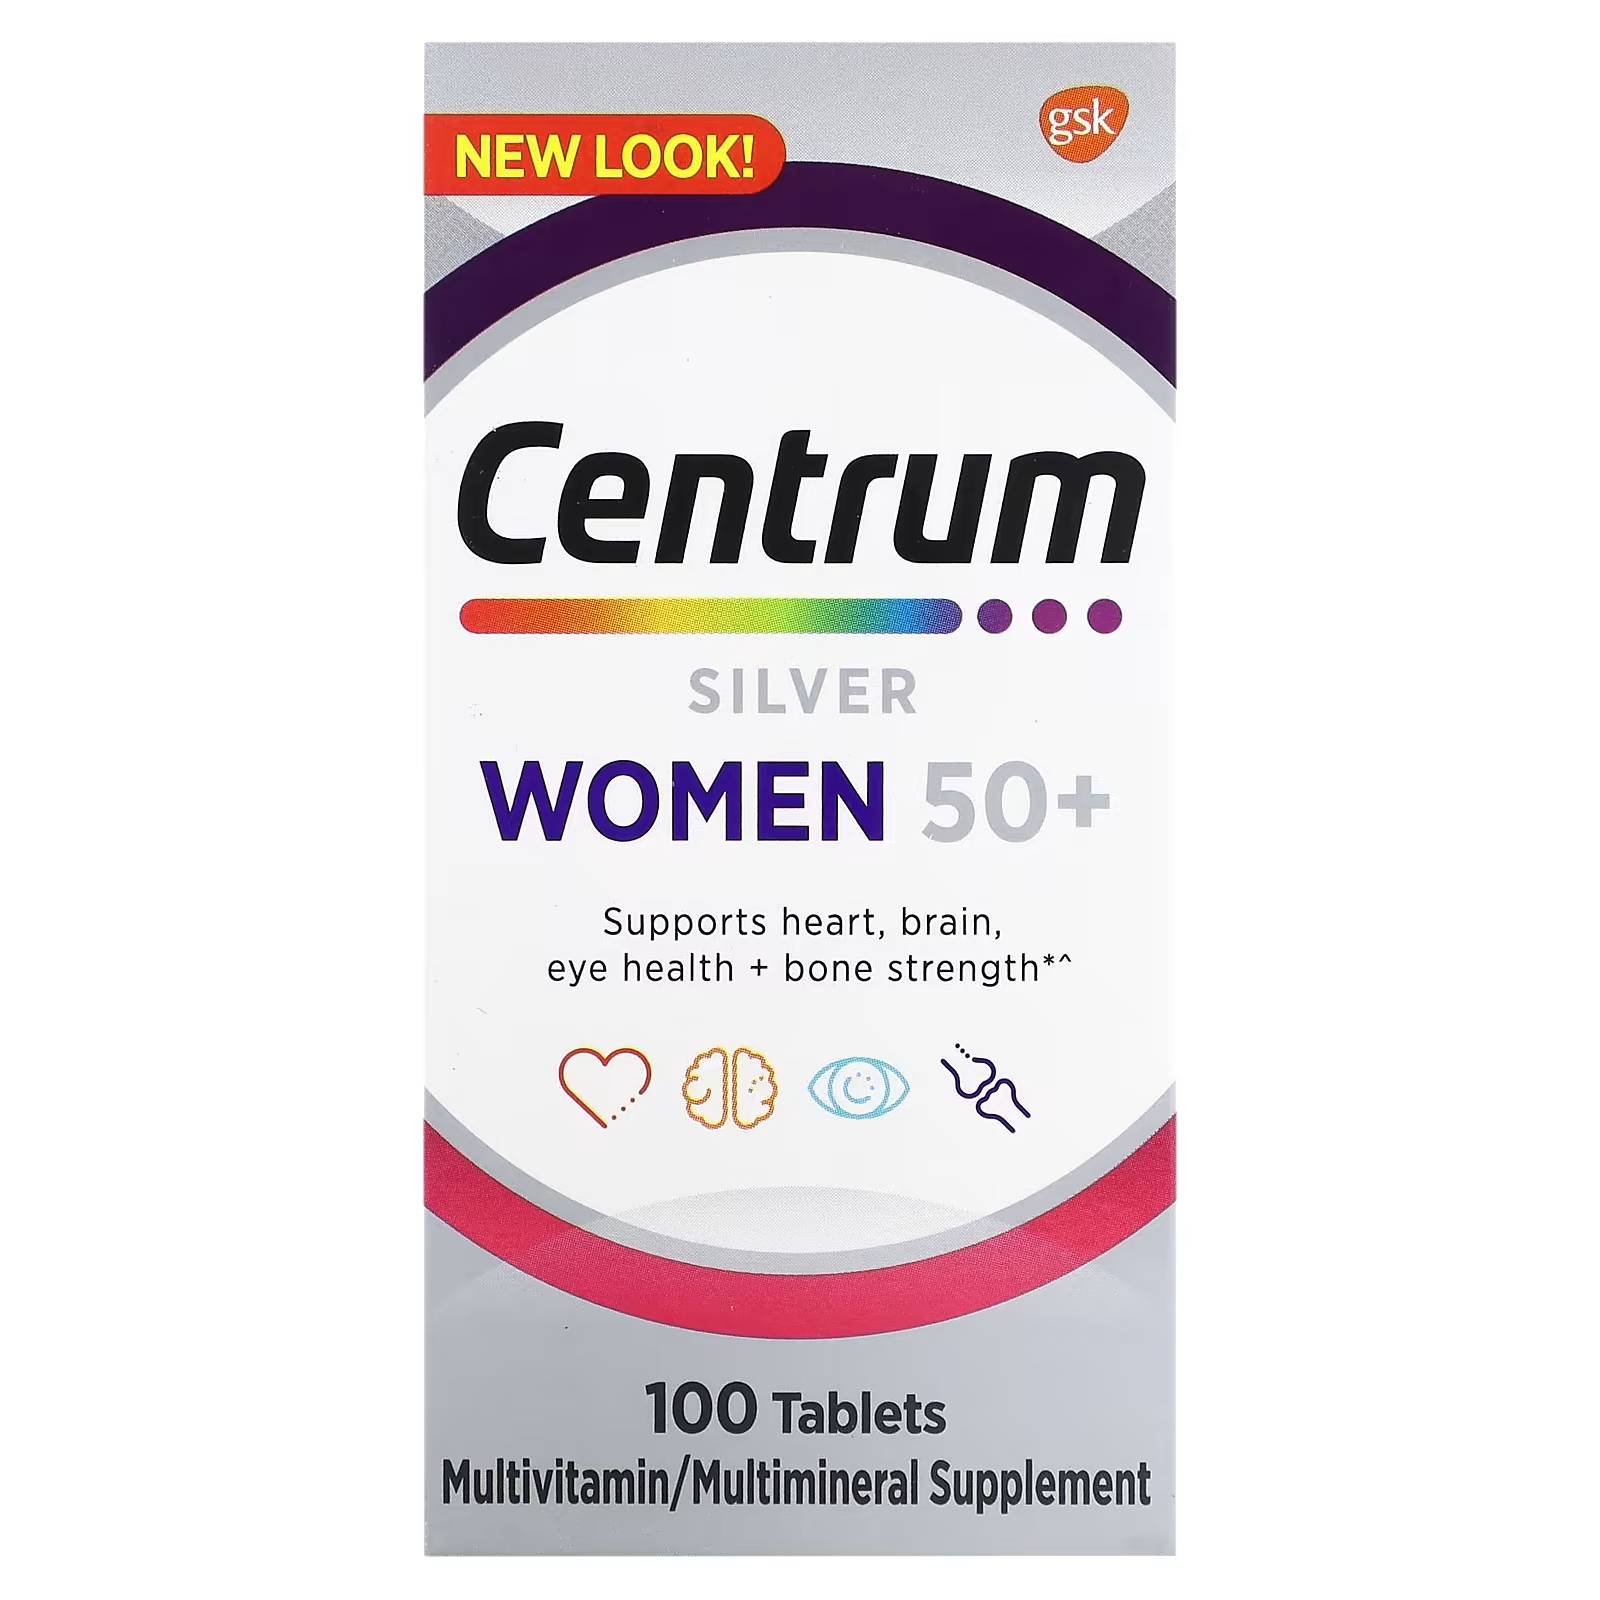 Мультивитаминная добавка Centrum Silver для женщин 50+, 100 таблеток whitaker nutrition forward plus daily regimen everyday vitality ежедневная мультивитаминная добавка 60 пакетиков